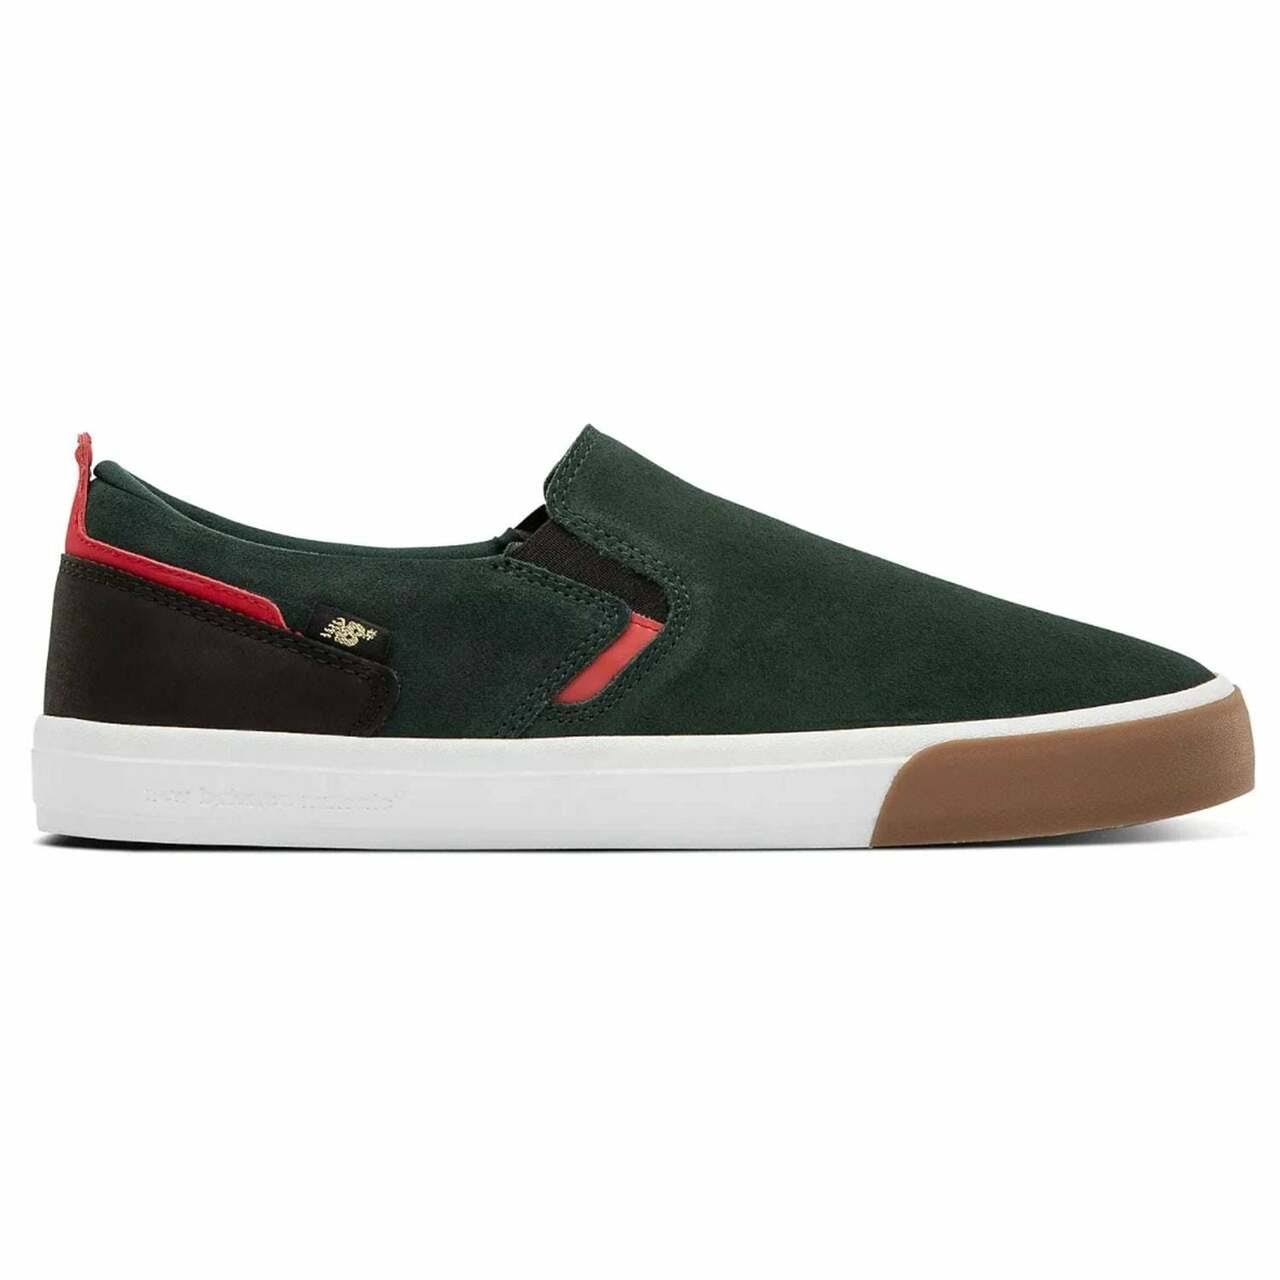 New Balance Numeric 306 Jamie Foy Slip on Shoes - Green / Black